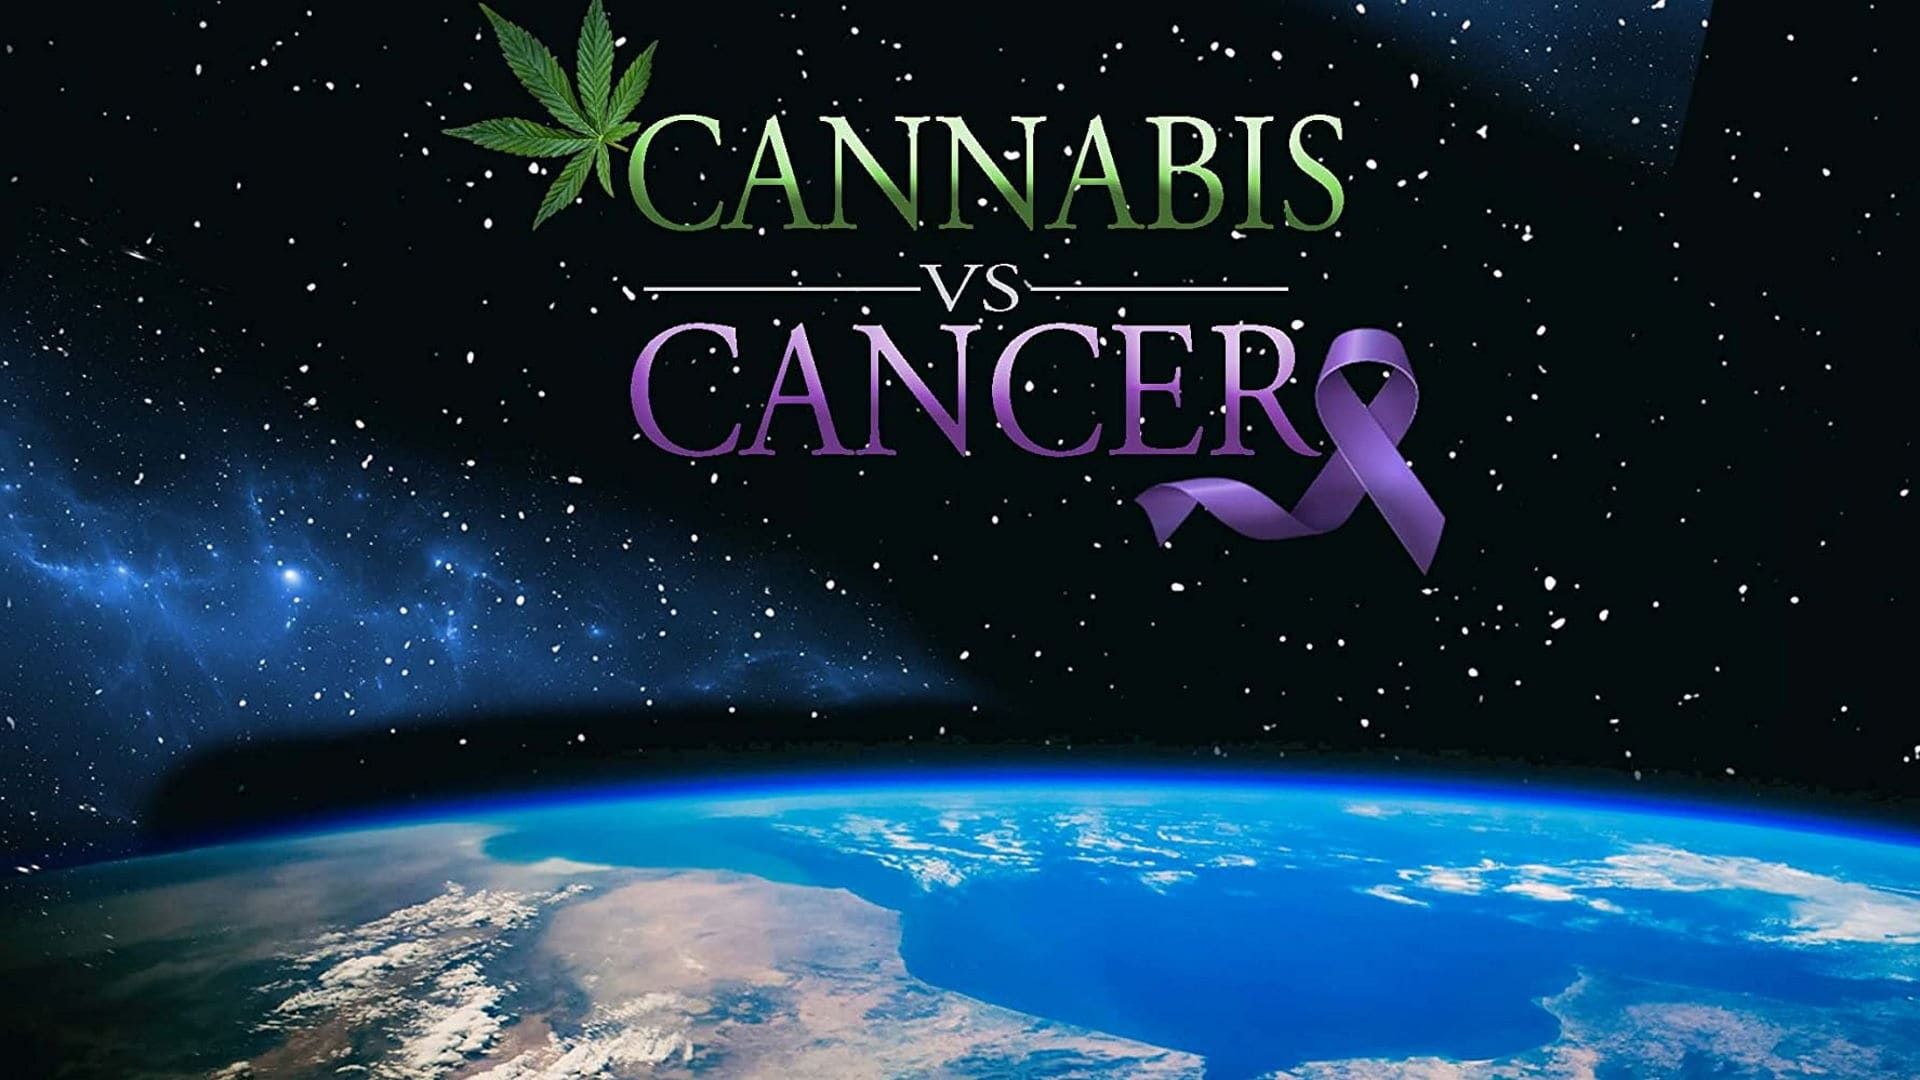 Cannabis vs. Cancer background